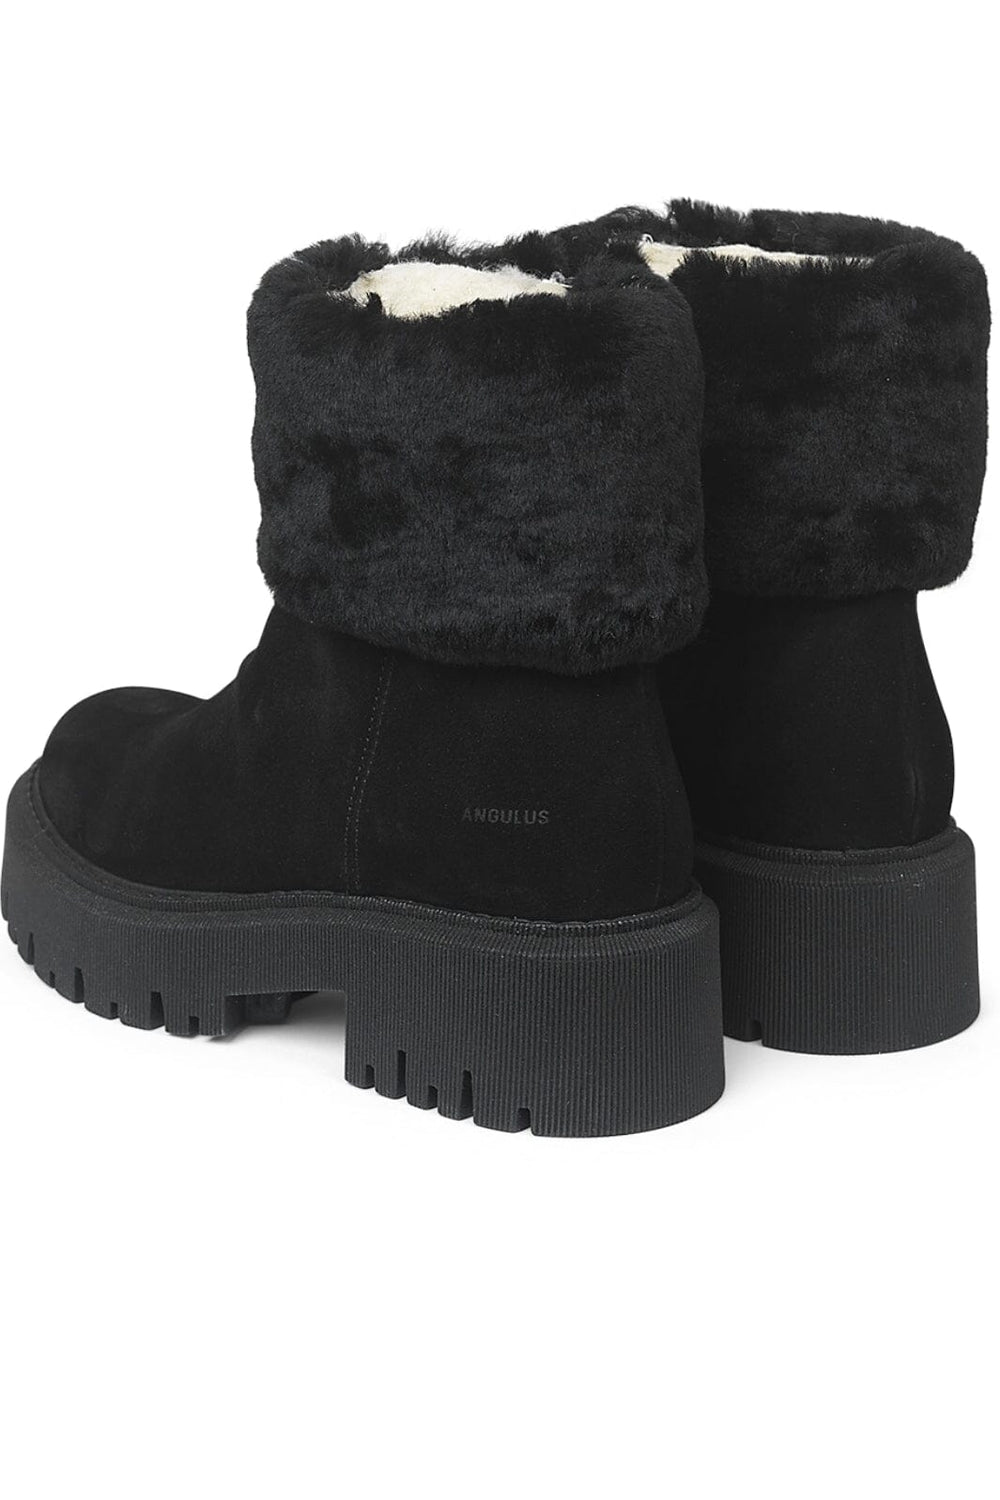 Angulus - Boot with wool lining - 1163/2014 Black/BLack Lamb Wool Vinterstøvler 